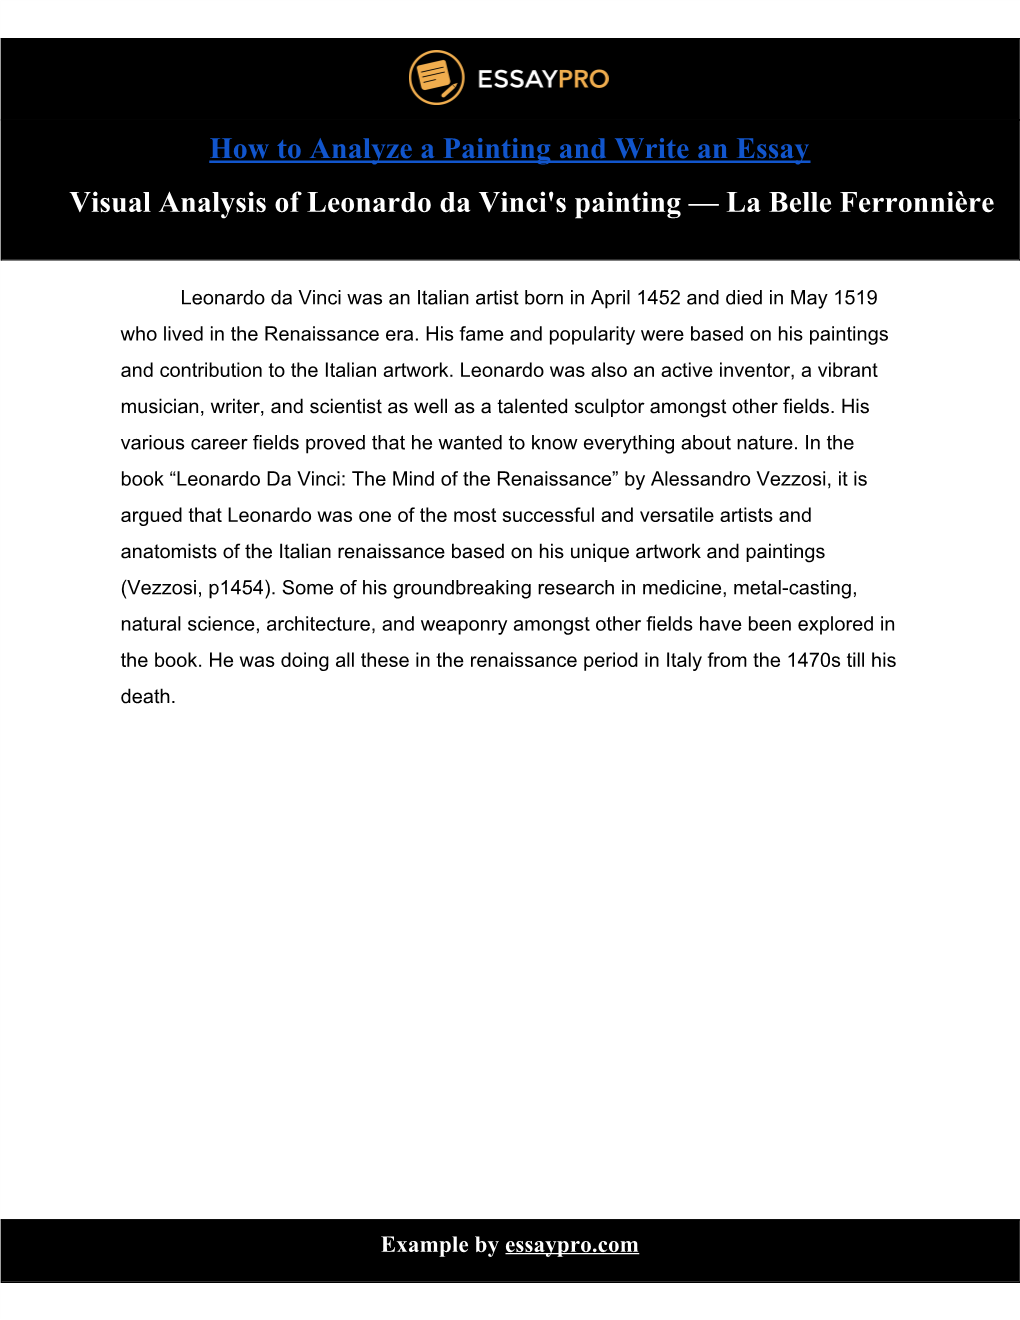 Visual Analysis of Leonardo Da Vinci's Painting — La Belle Ferronnière